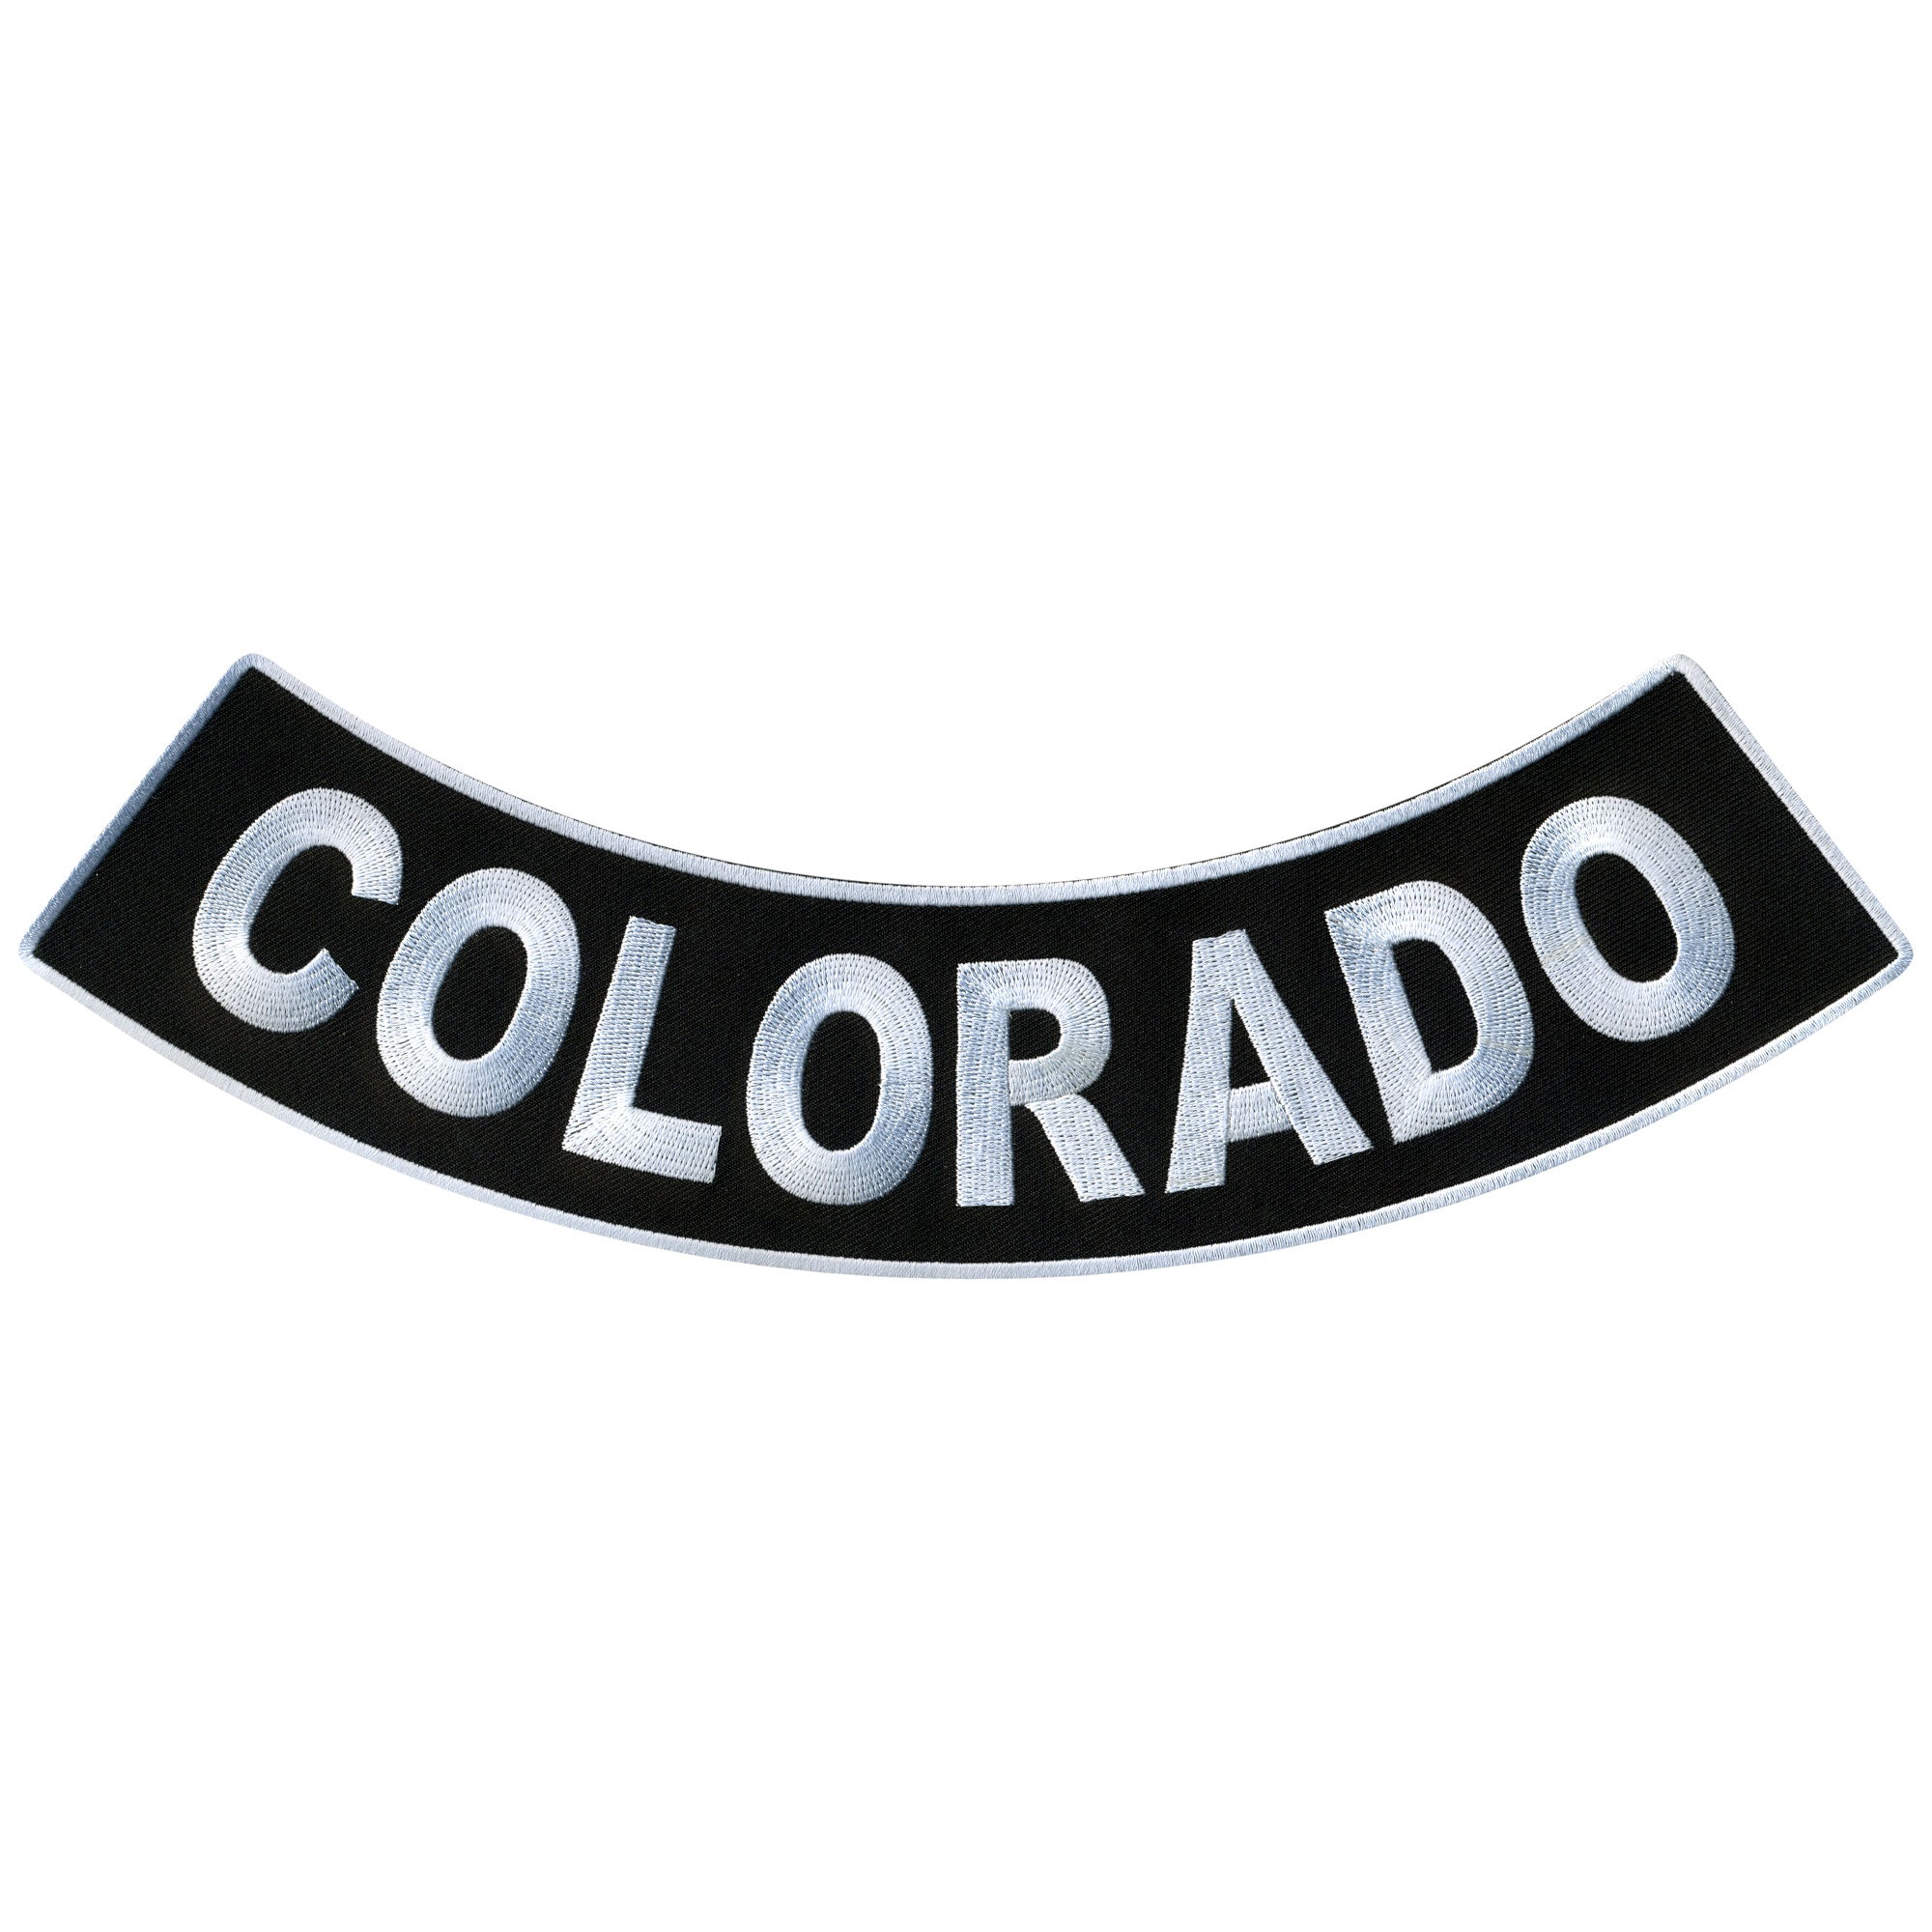 Hot Leathers Colorado 12” X 3” Bottom Rocker Patch